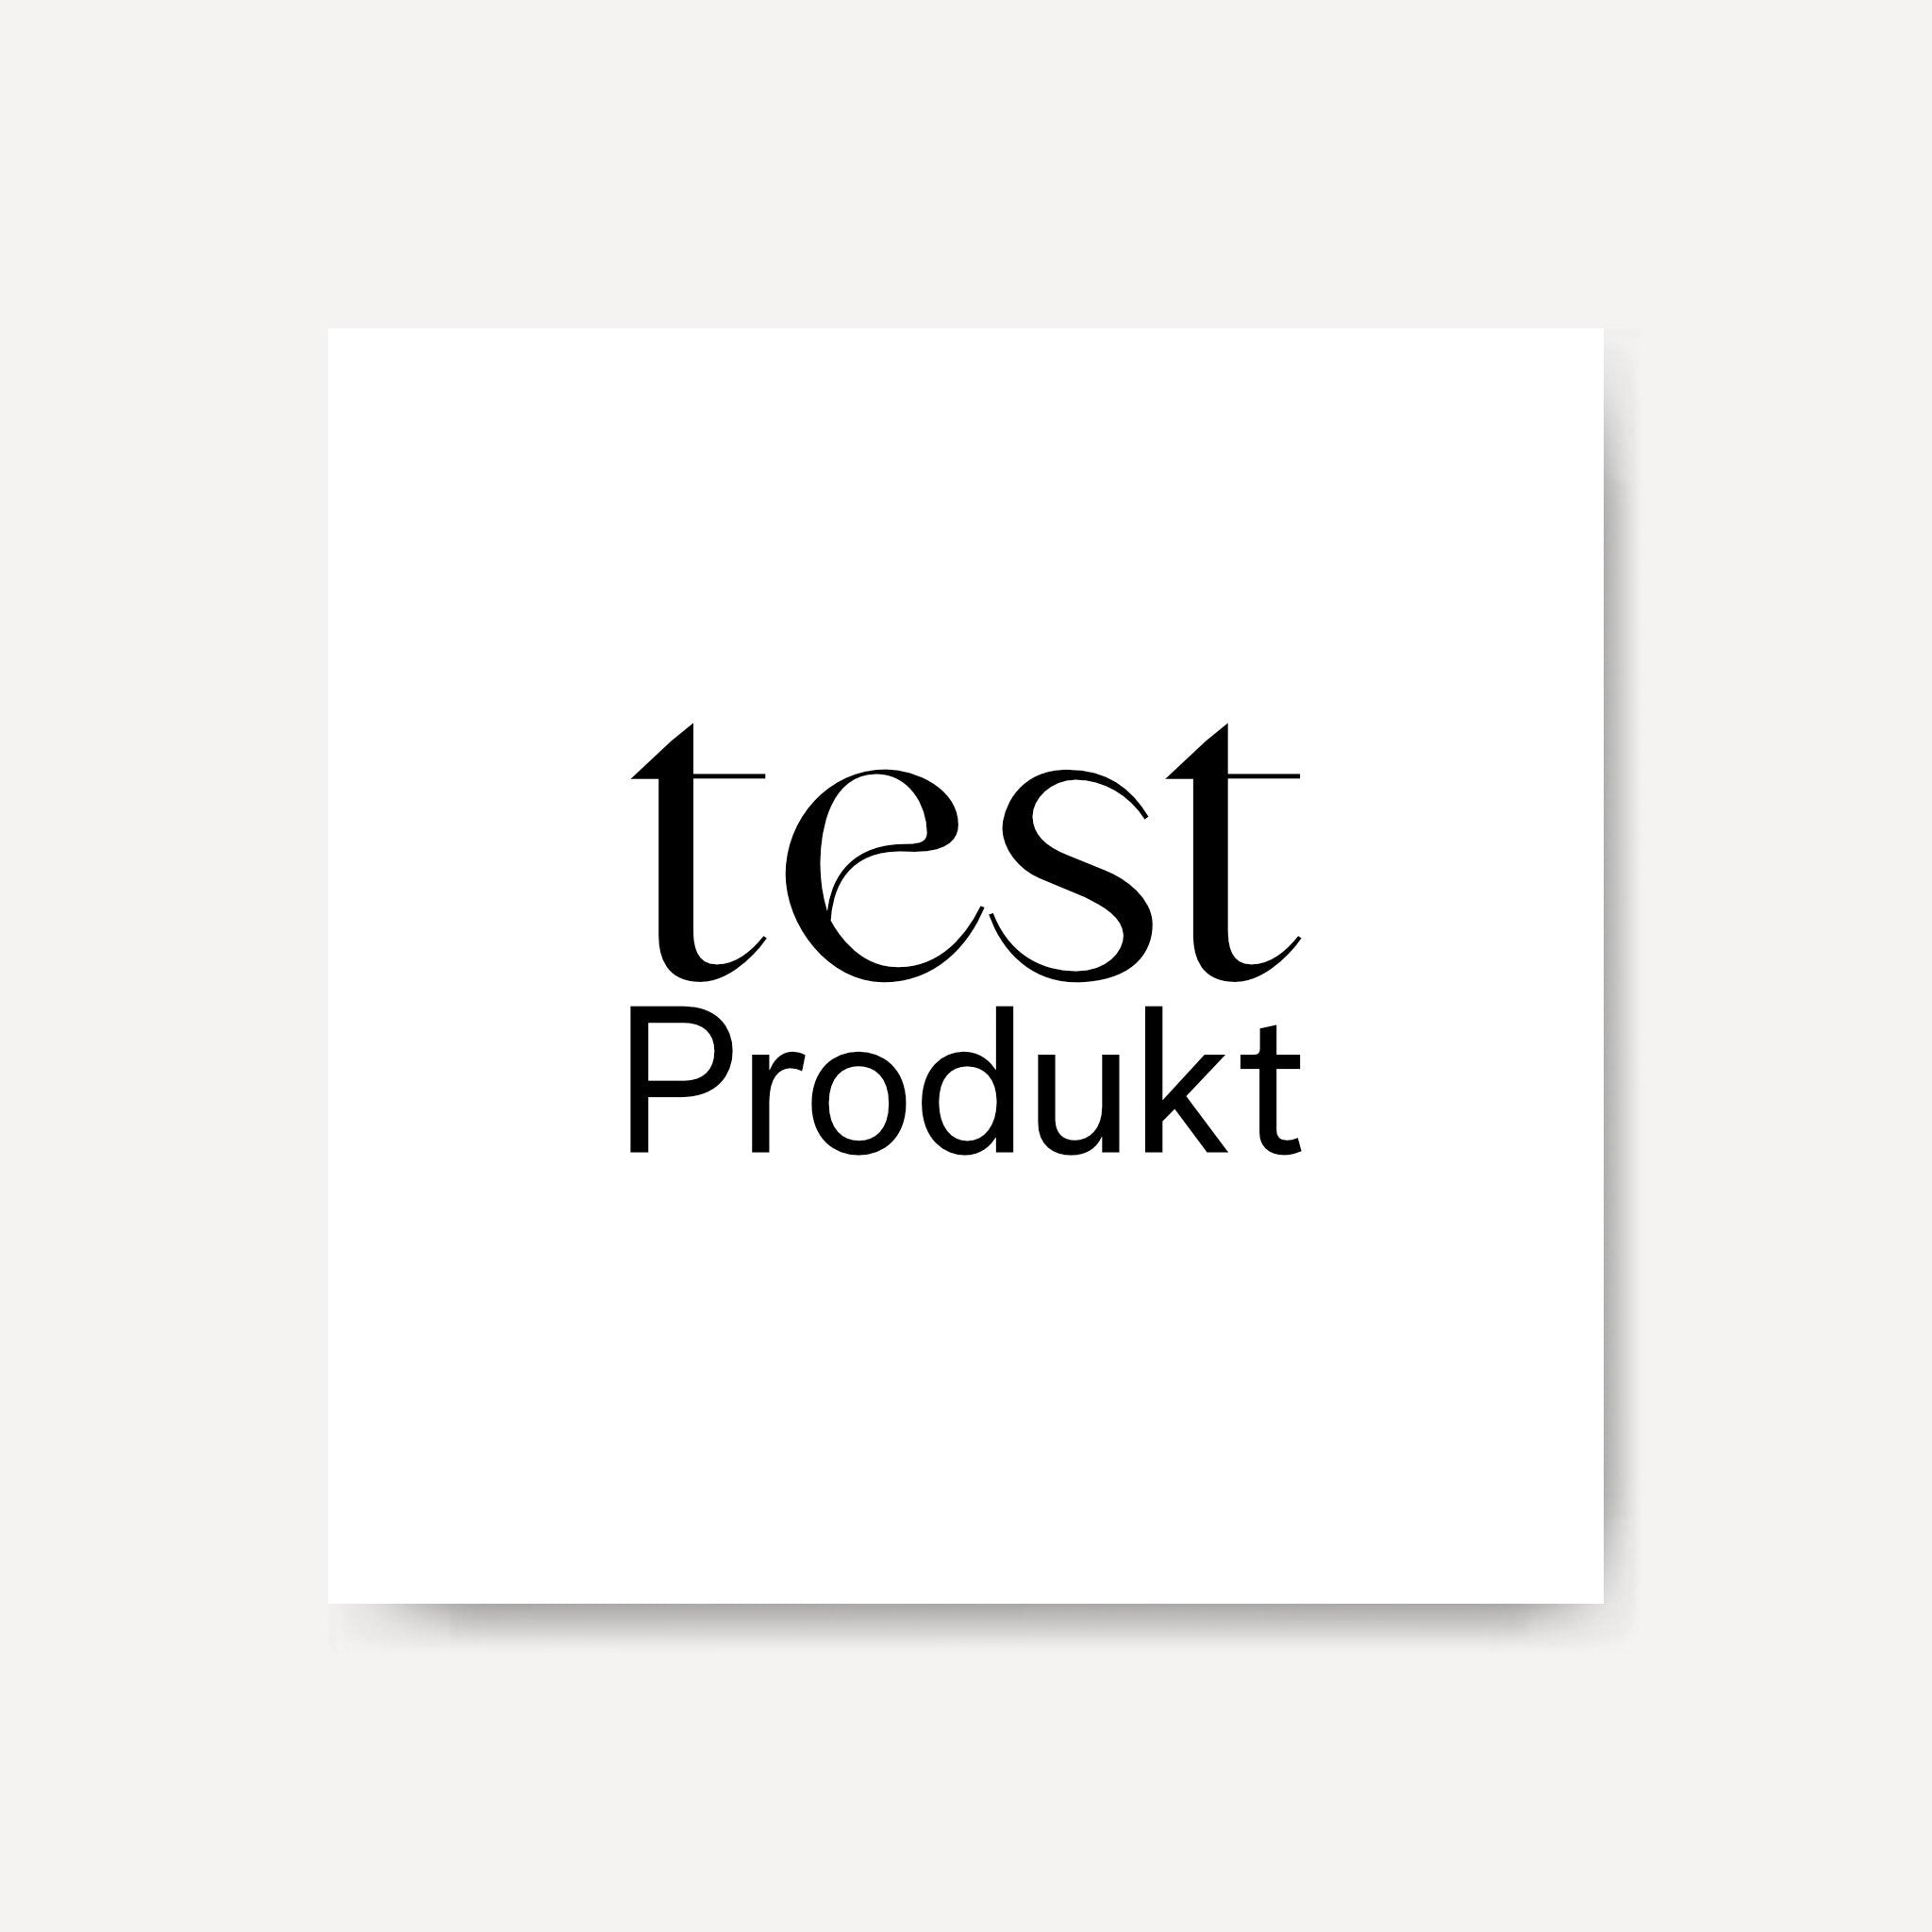 Testprodukt_577b2b34-c1f6-4341-a988-9bf1757934a1.jpg